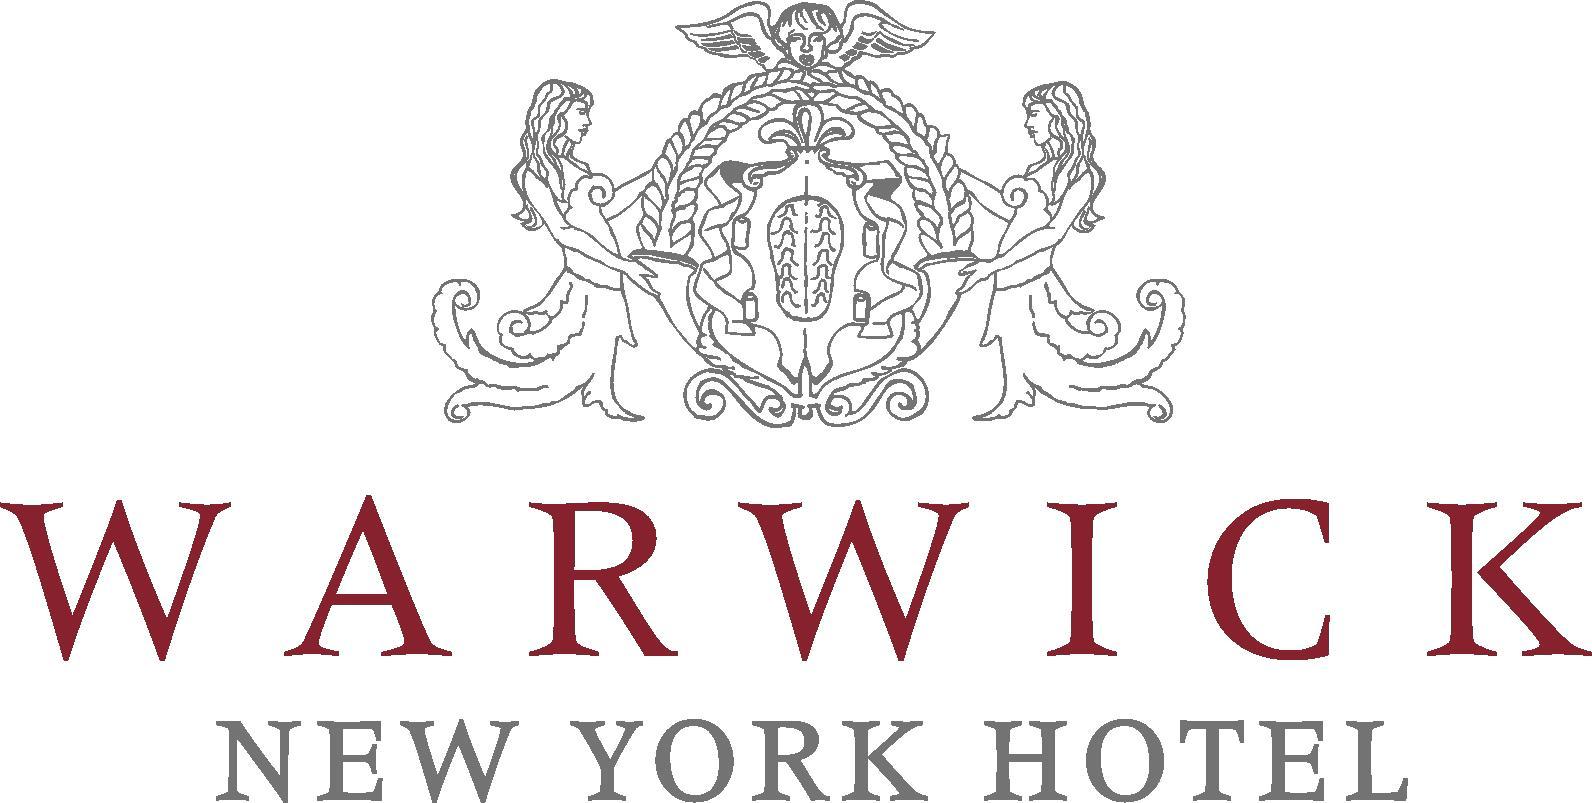 The Warwick New York Hotel